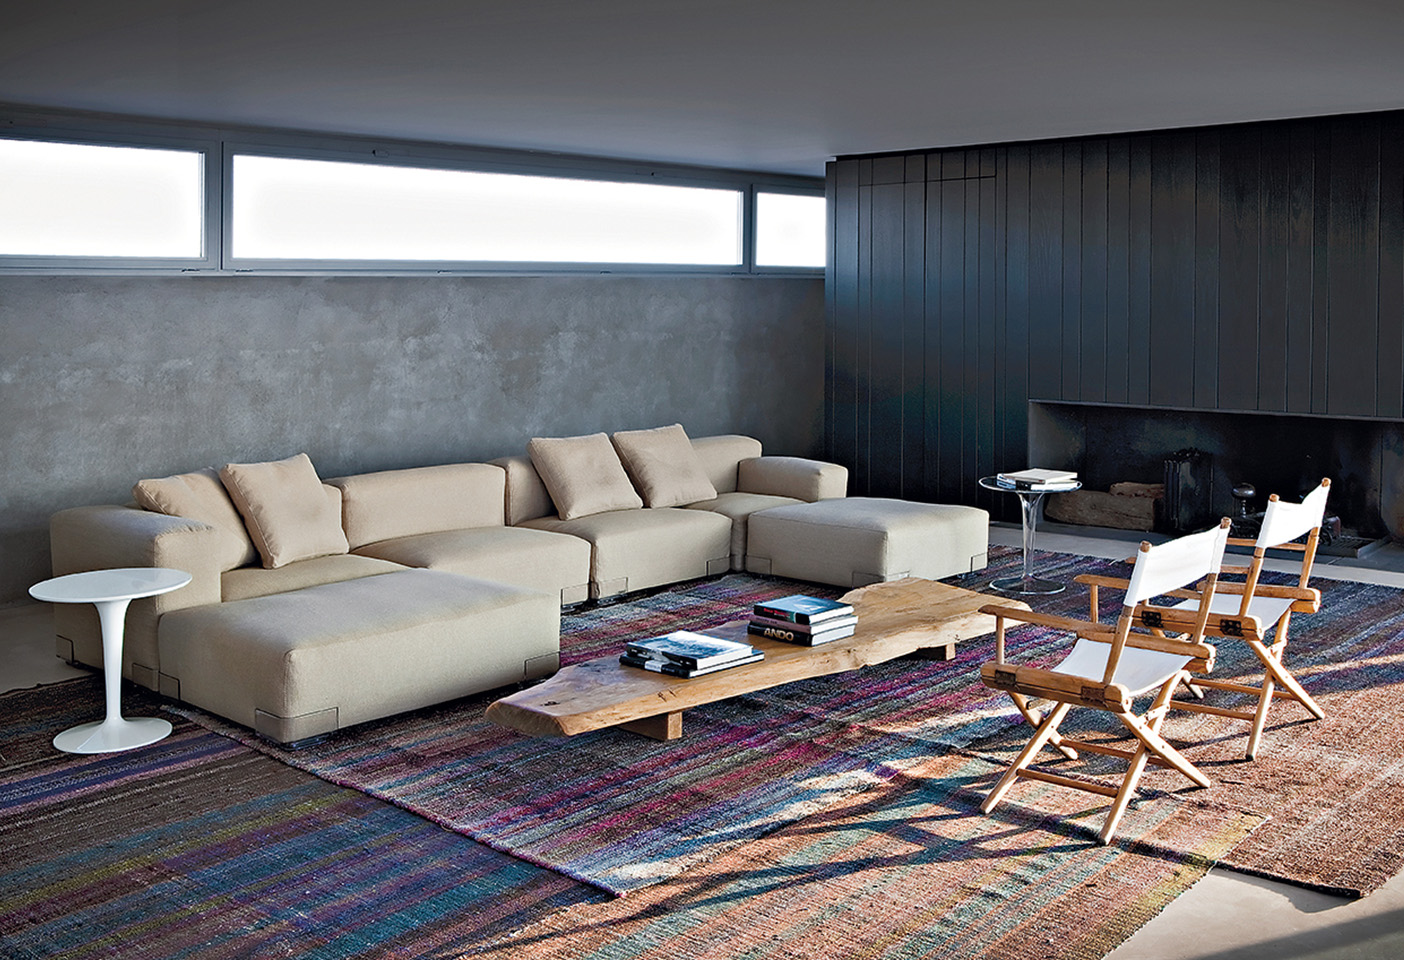 The Plastics Duo sofa designed by Piero Lissoni for Kartell. Photo c/o Kartell. 